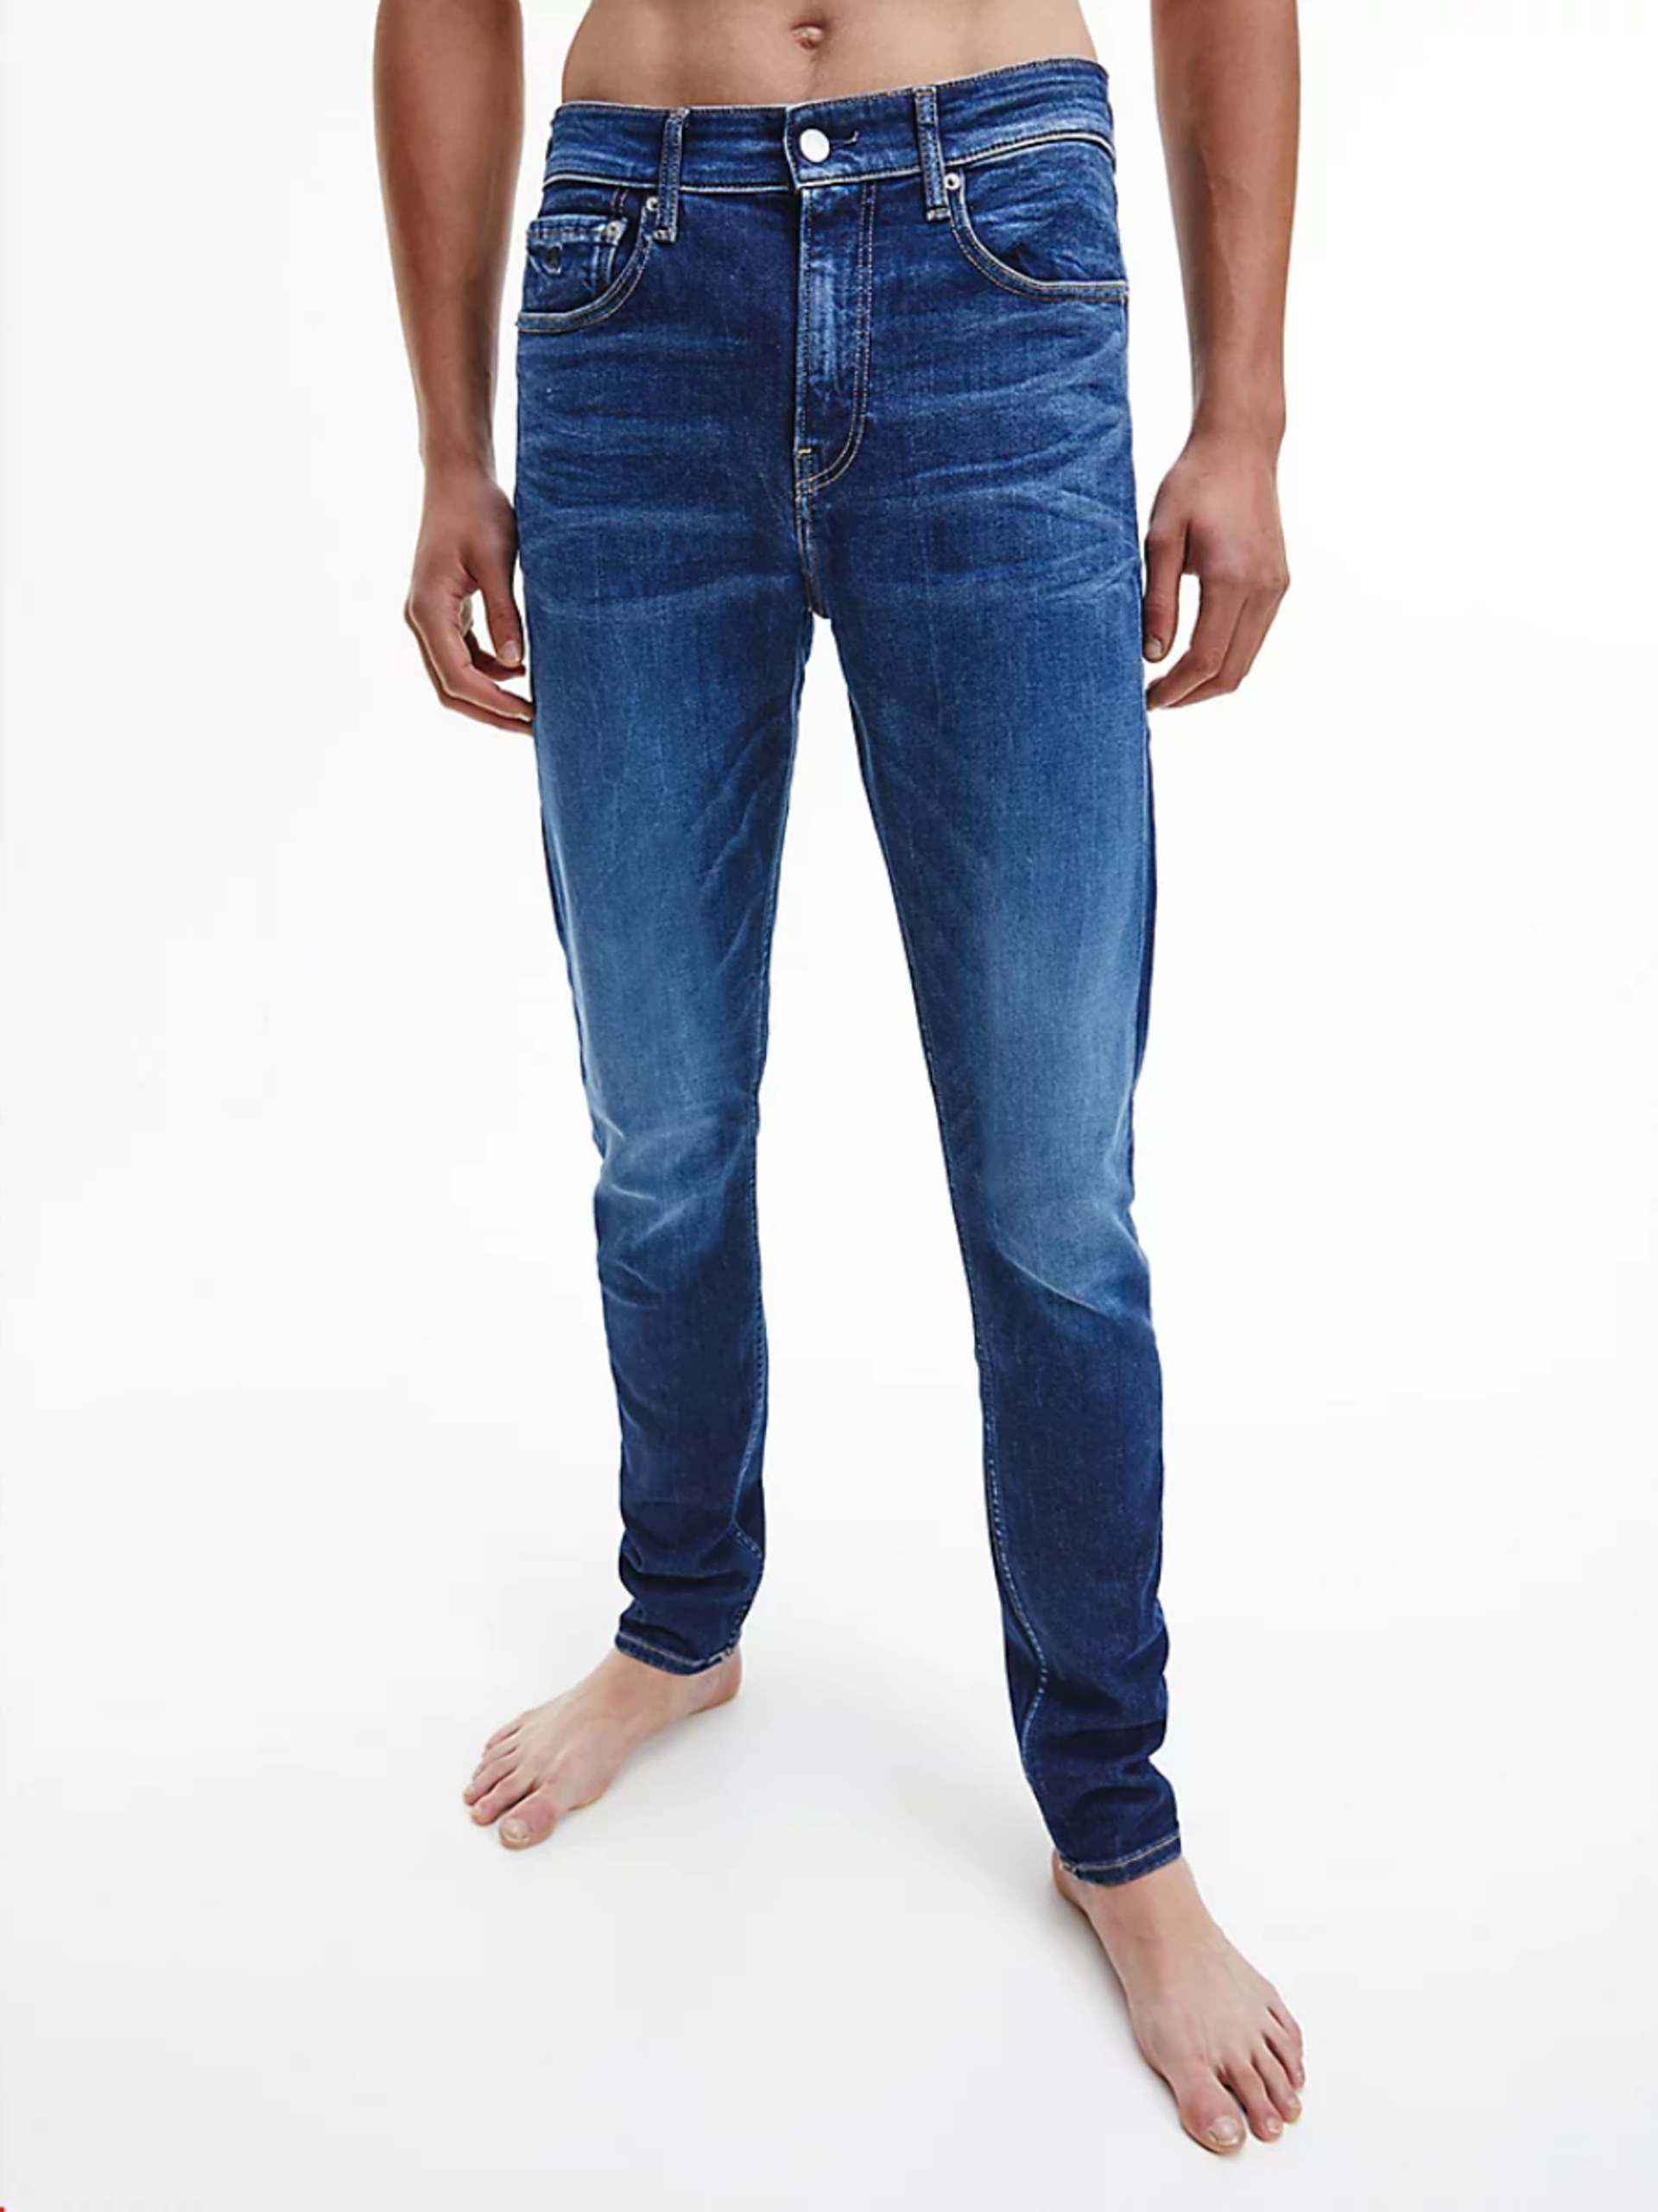 Calvin Klein pánské modré džíny Taper - 30/32 (1BJ)